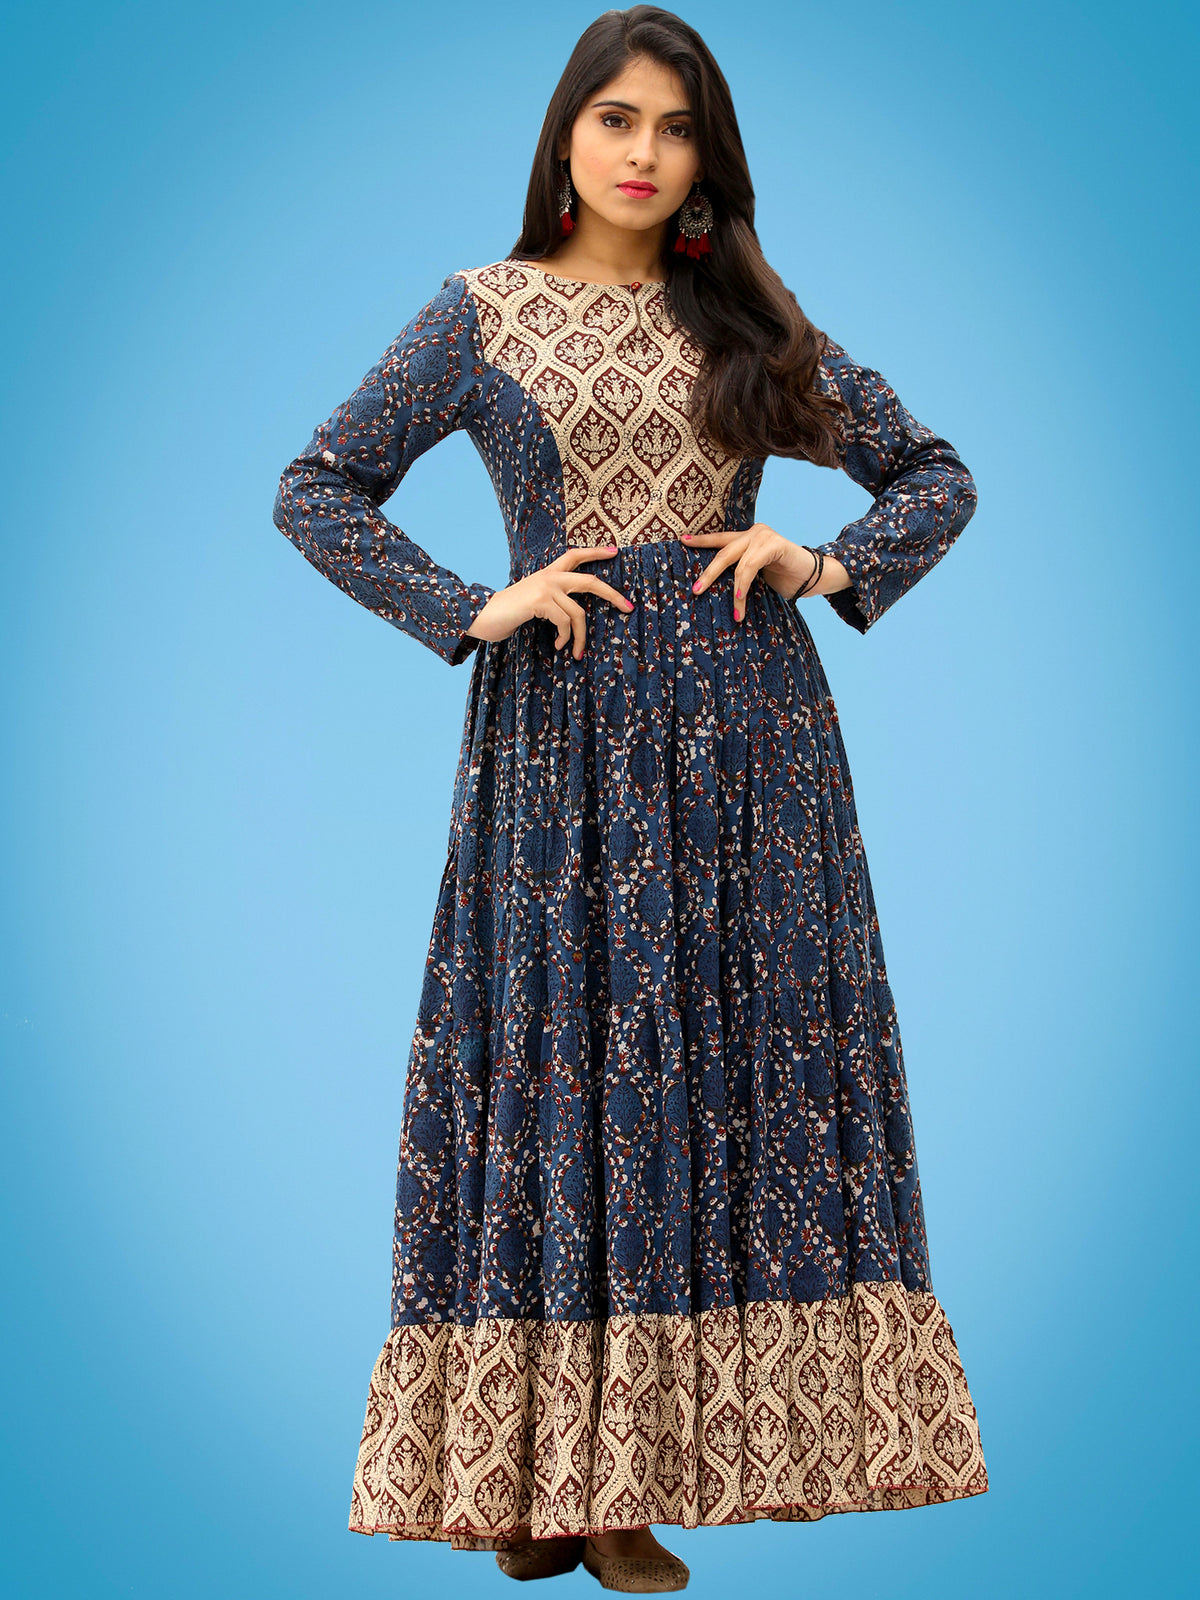 Taraab - Long Hand Block Printed Cotton Tier Dress - D139F1728